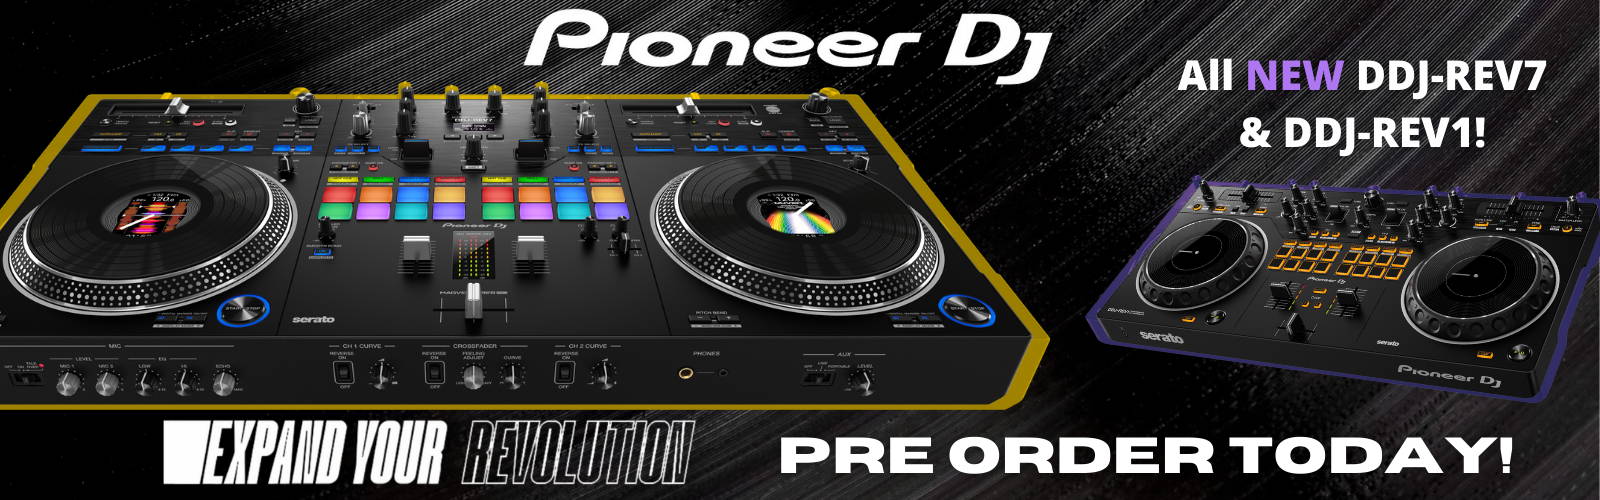 Pioneer DJ DDJ-REV7 & DDJ-REV1